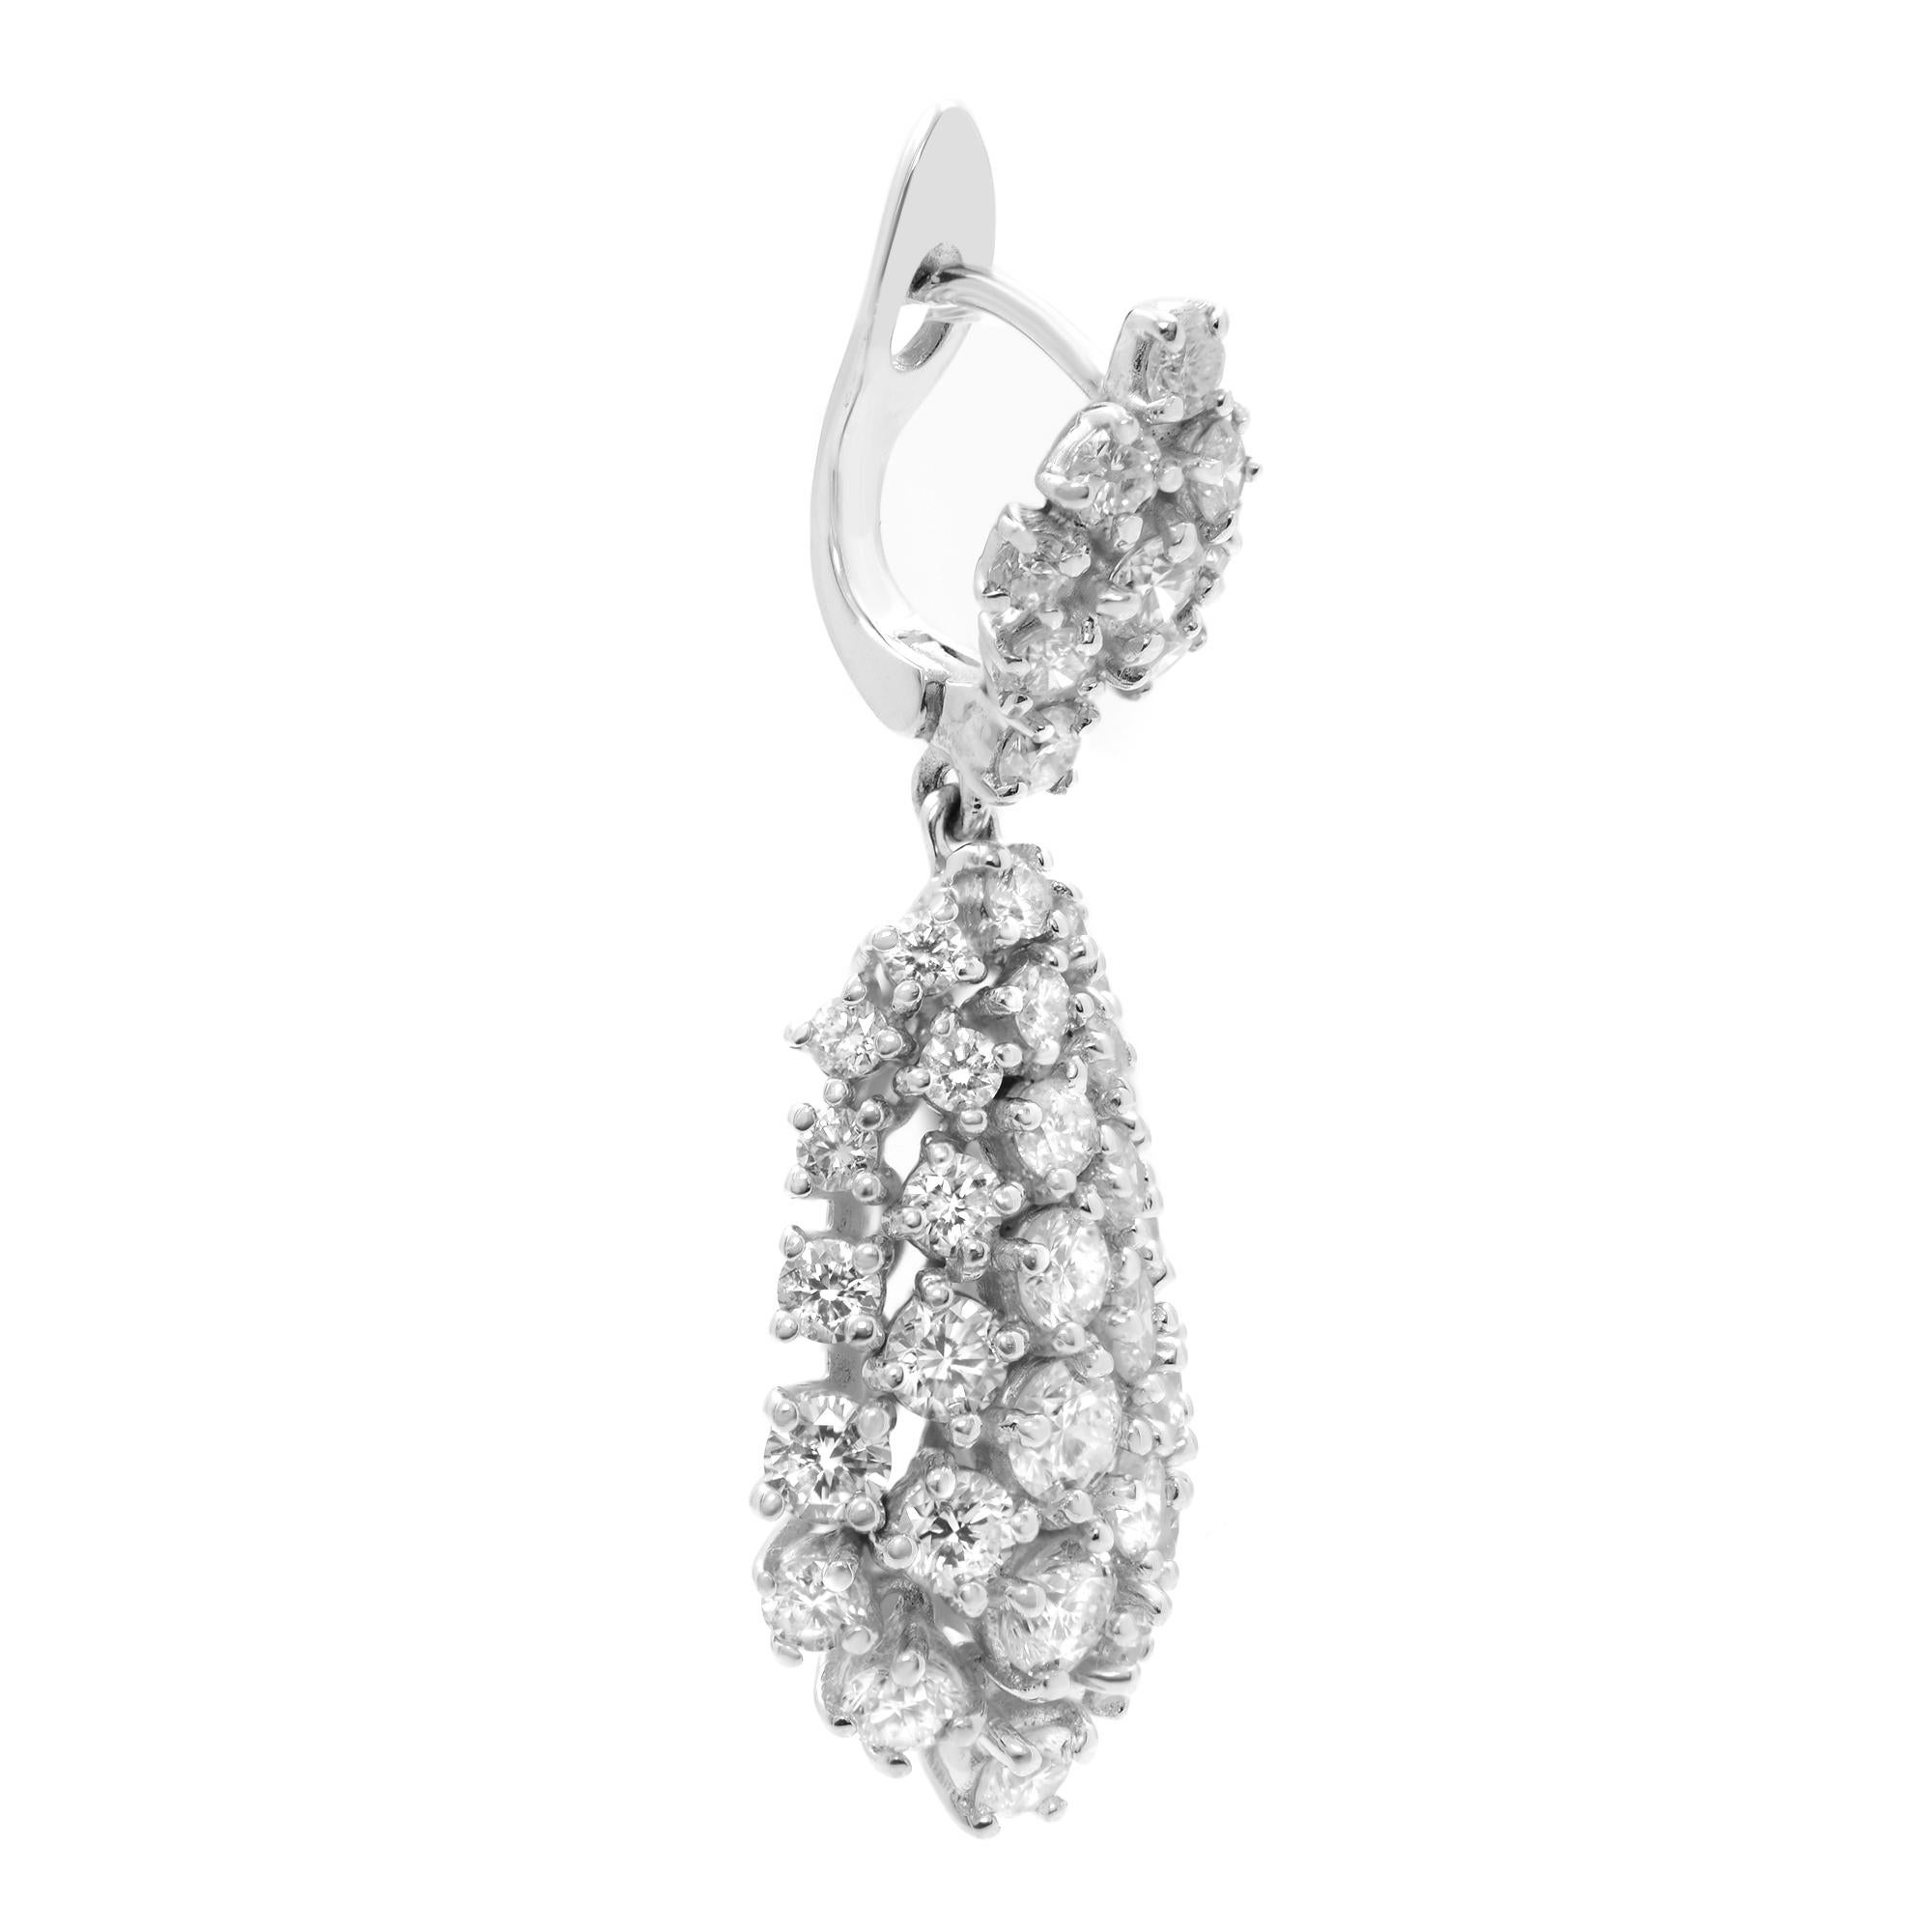 Rachel Koen 14K White Gold Diamond Drop Earrings 4.32Cttw In Excellent Condition For Sale In New York, NY